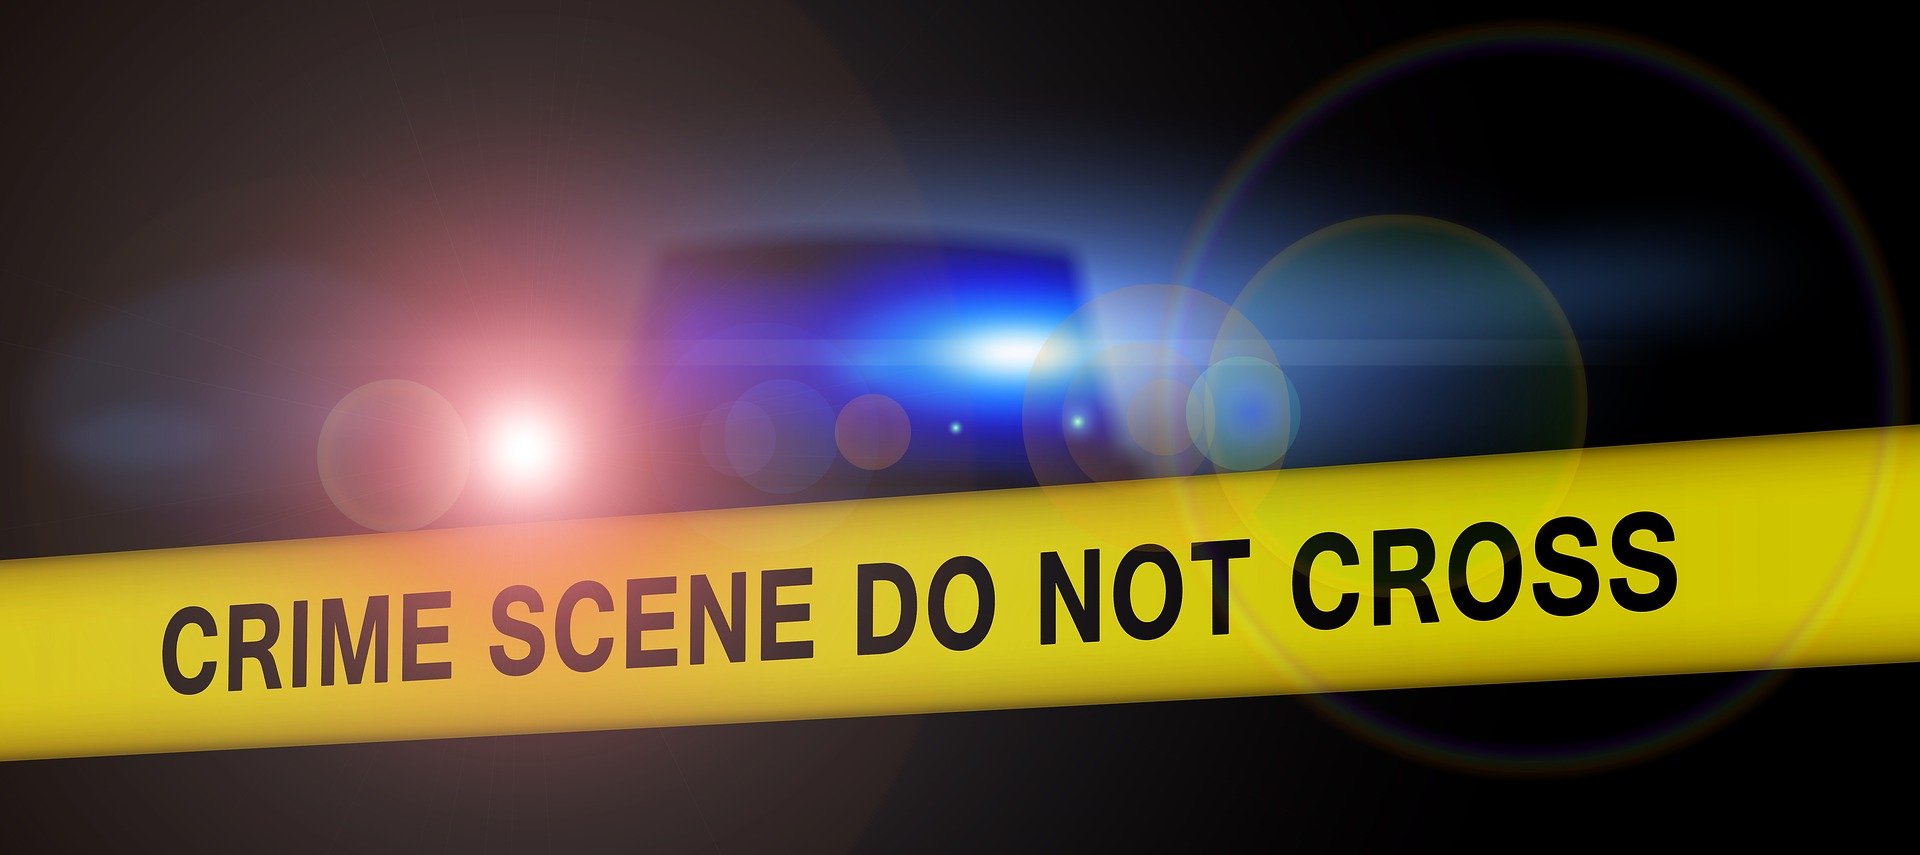 An image depicting a police crime scene | Source: Pixabay